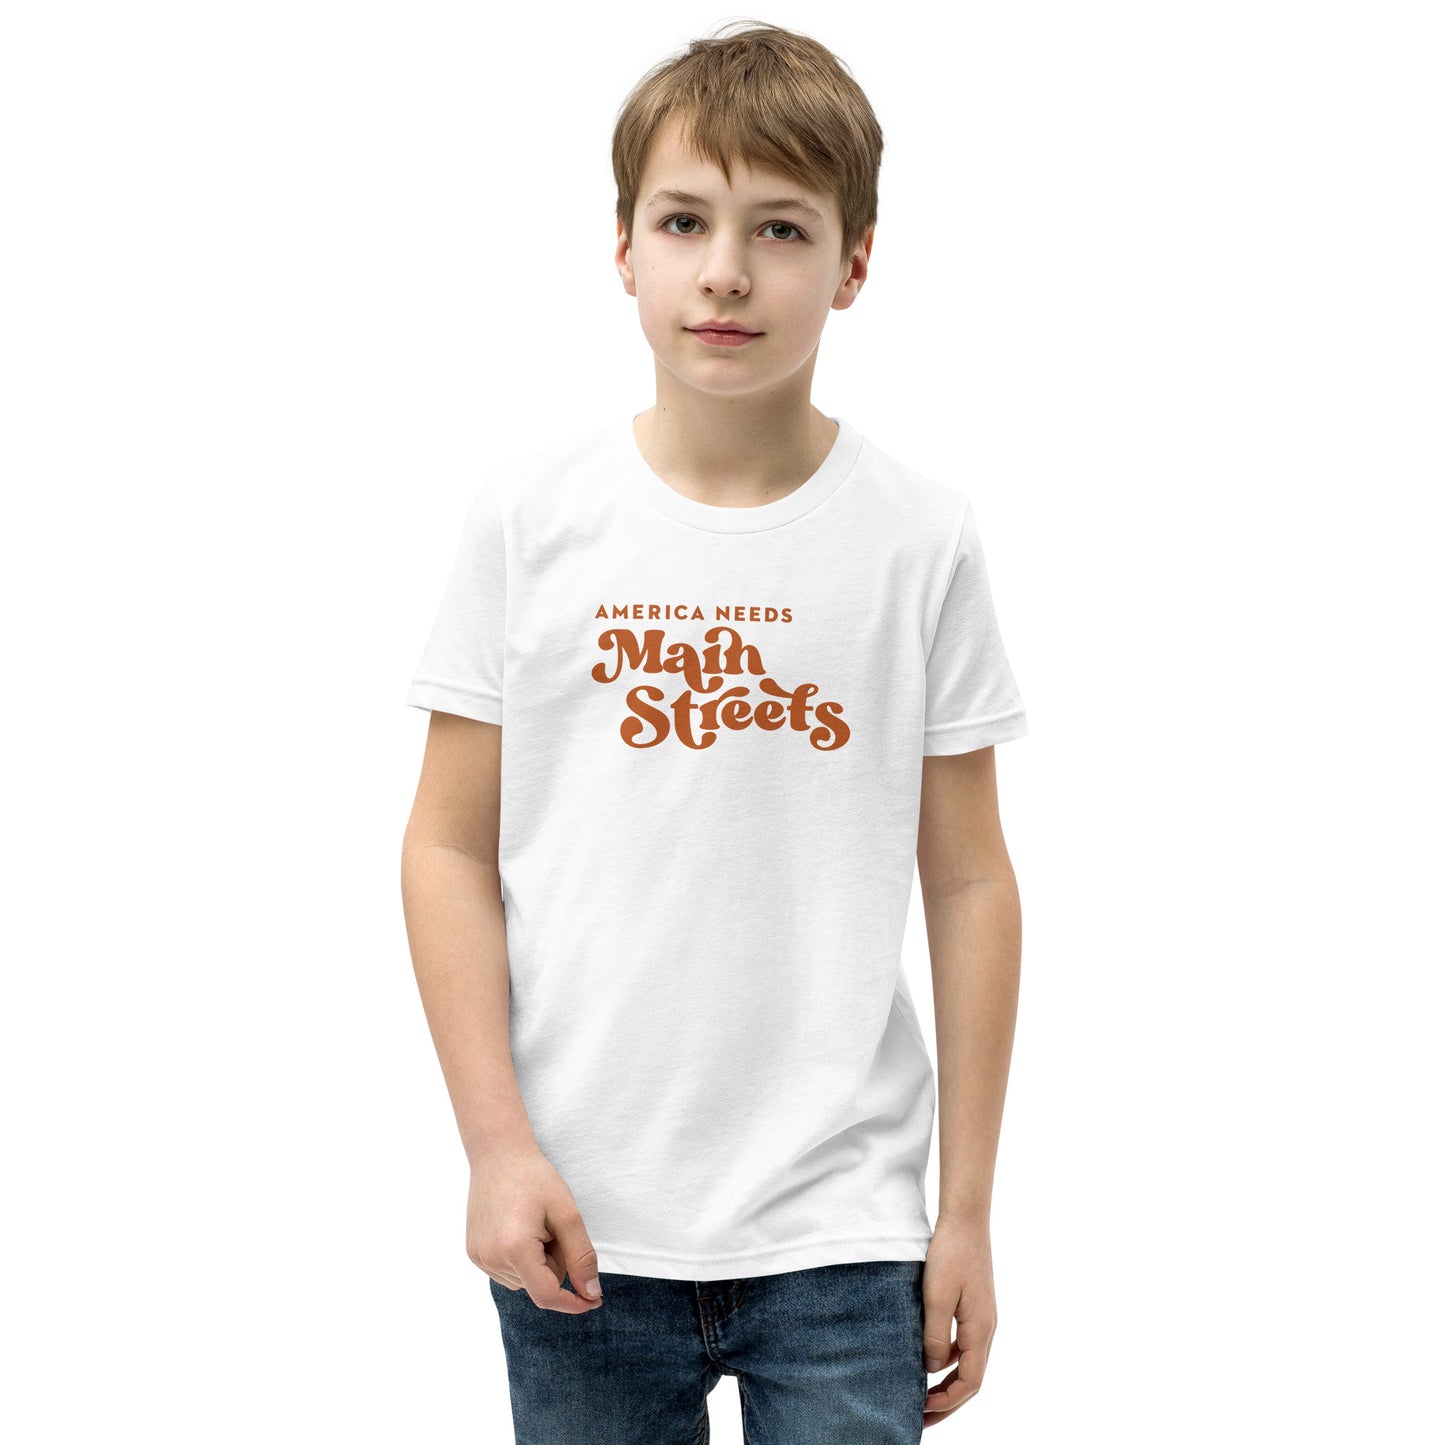 "America Needs Main Streets" Orange Youth Short Sleeve T-Shirt